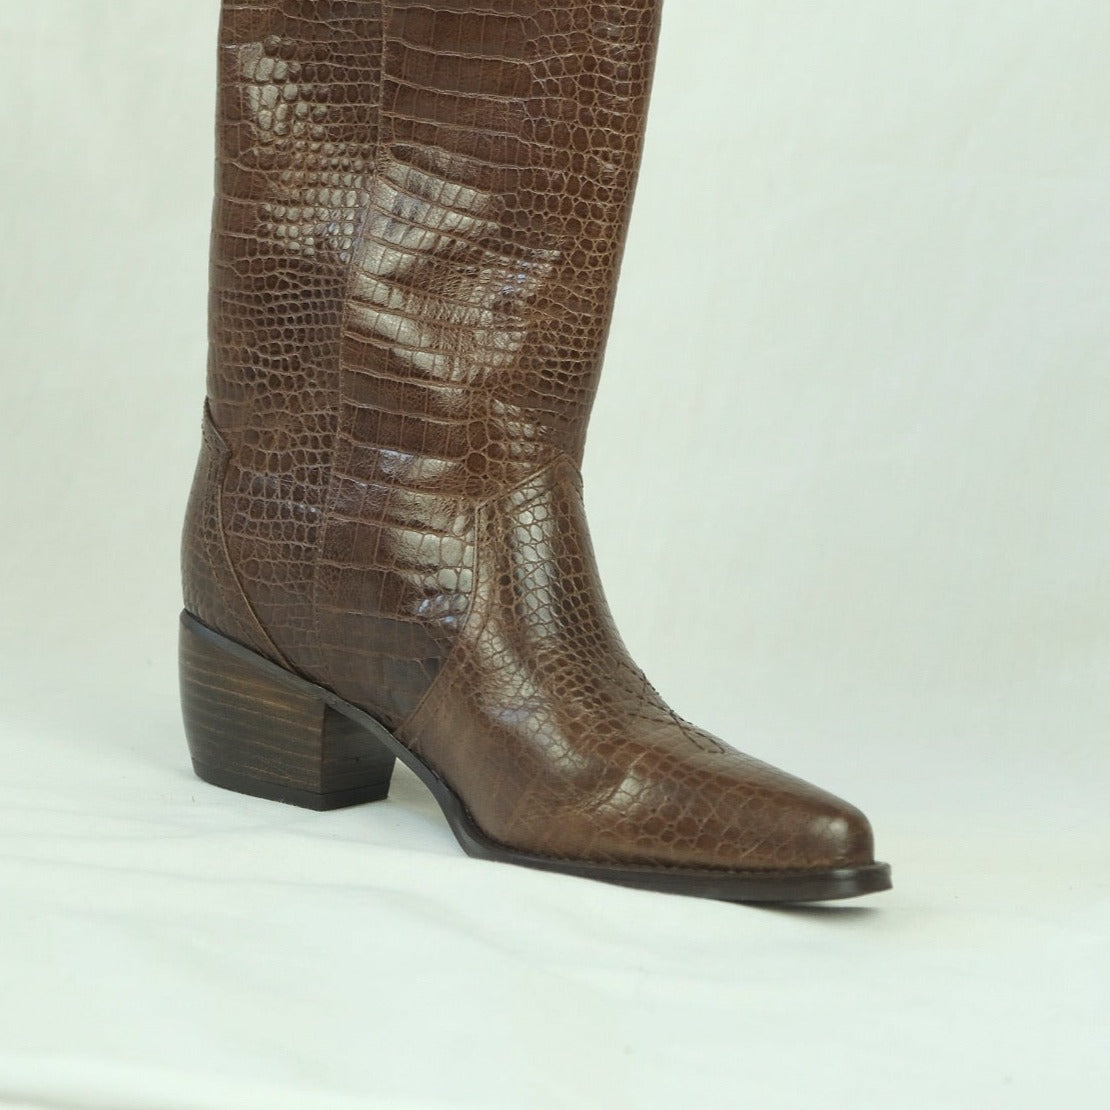 Brown cowboy boot